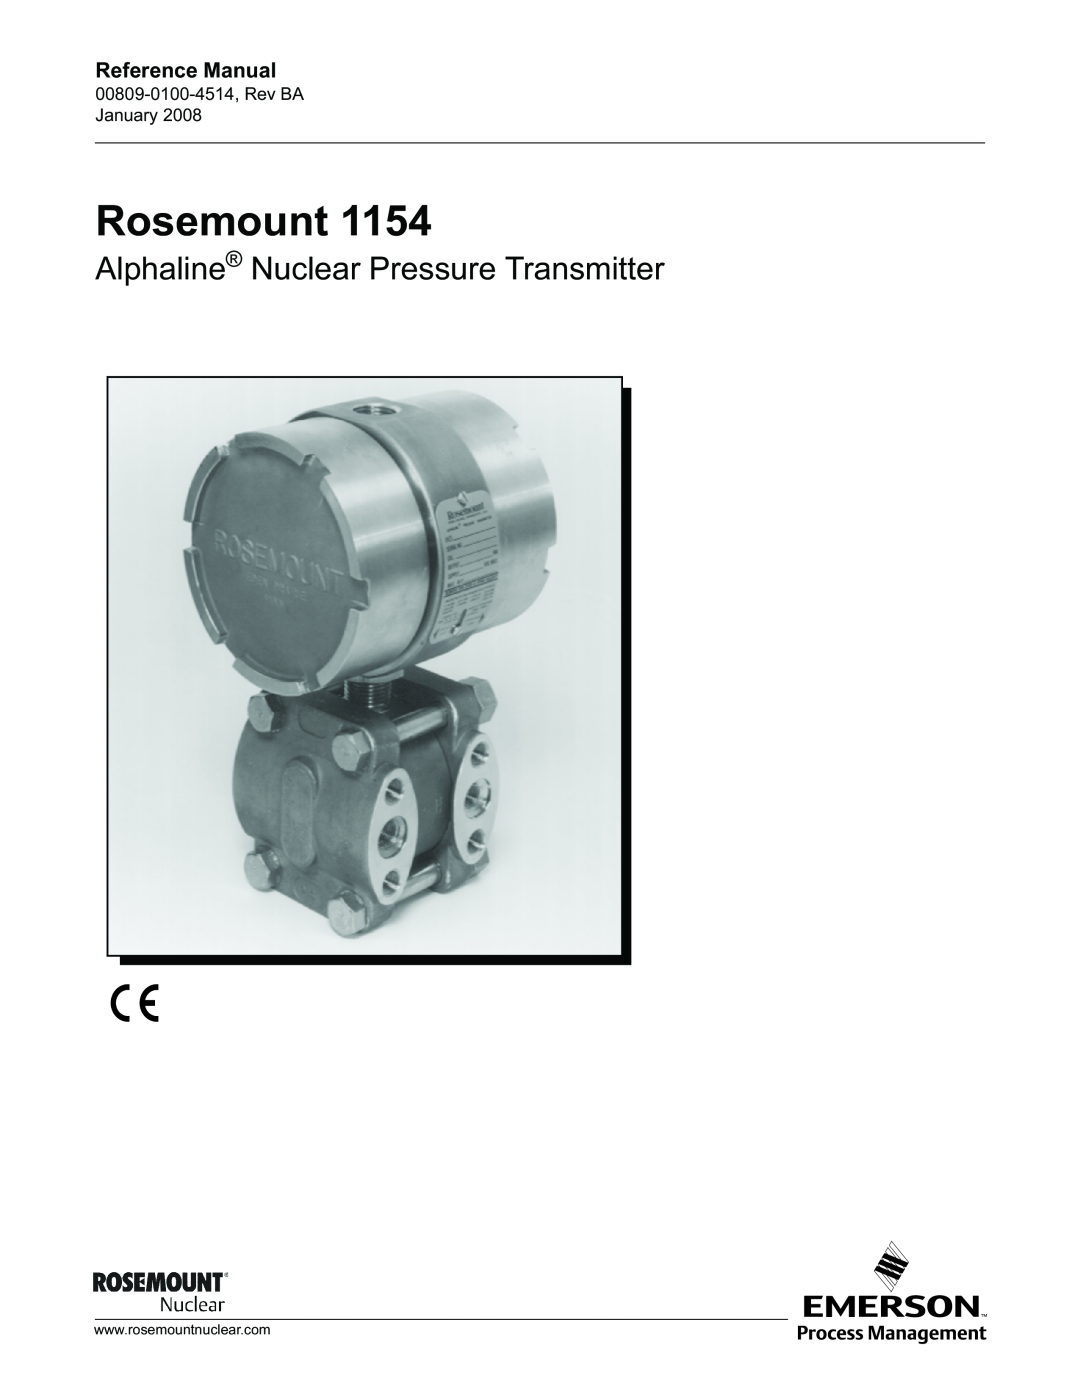 Emerson 1154, 00809-0100-4514 manual Rosemount, Alphaline Nuclear Pressure Transmitter, Reference Manual 